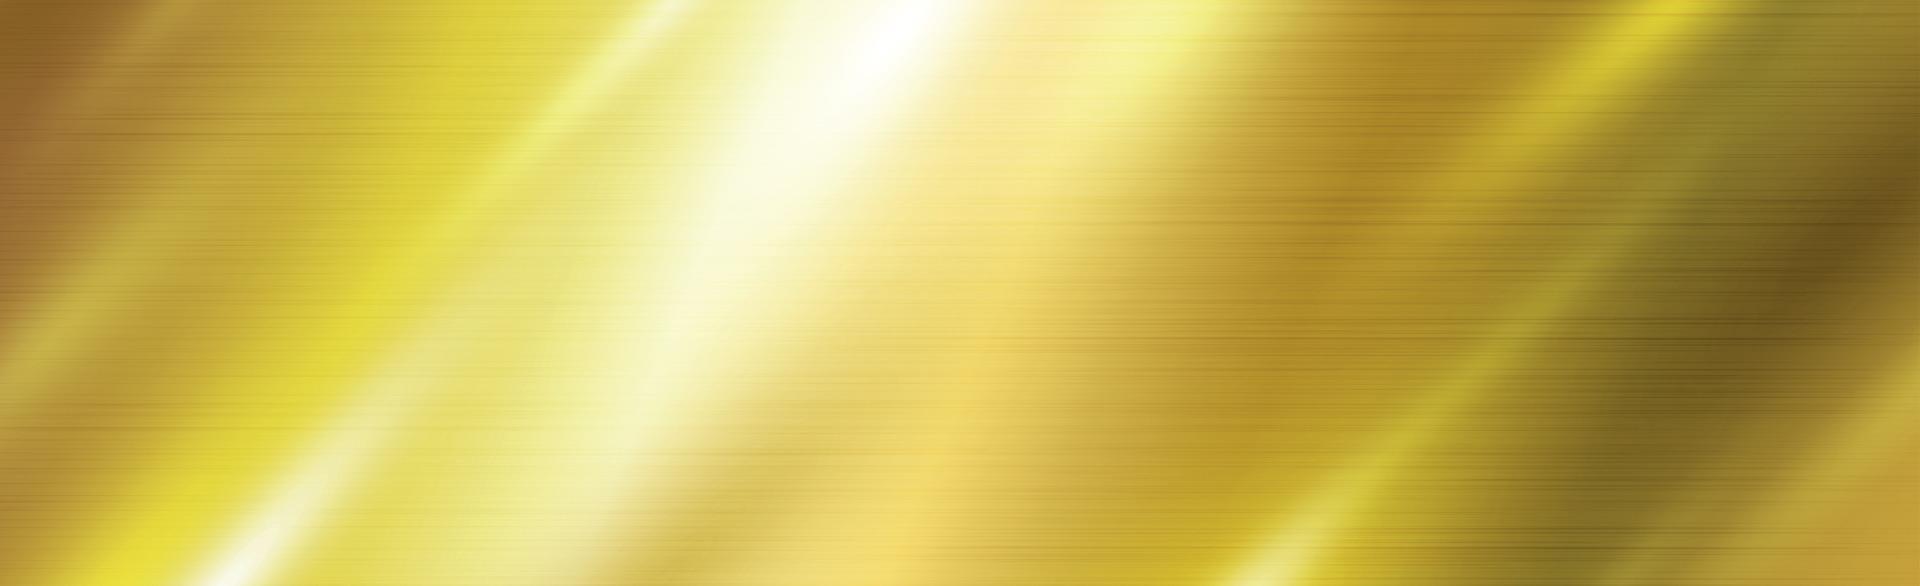 Panoramatextur aus Gold mit Glitzer - Vektor